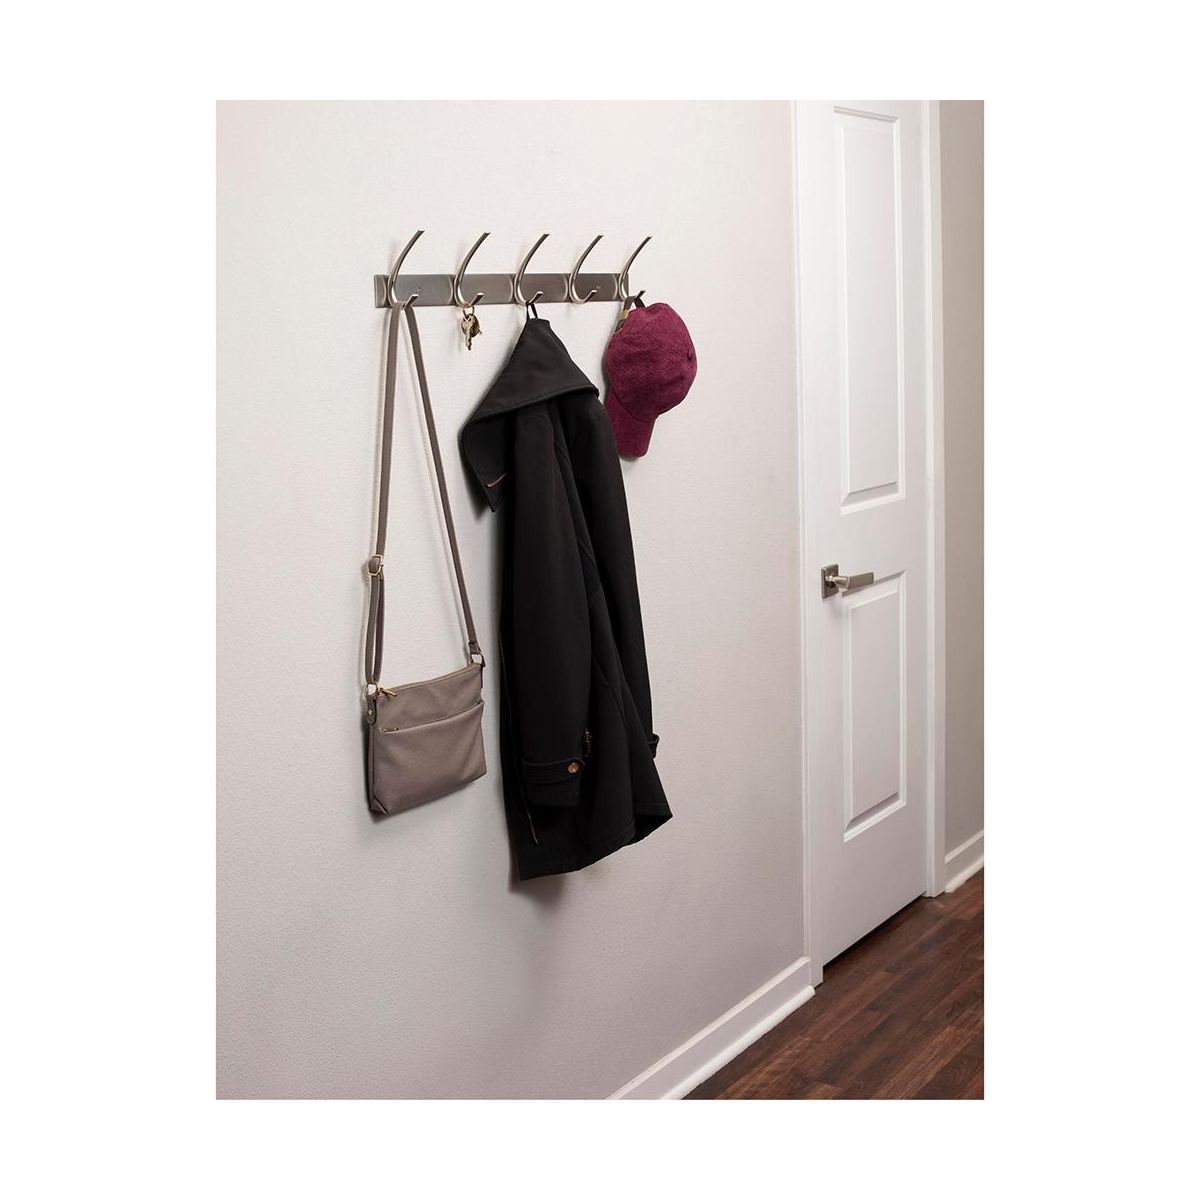 BirdRock Home Premium 5-Hook Coat and Hat Rack - Brushed Nickel Finish | Target